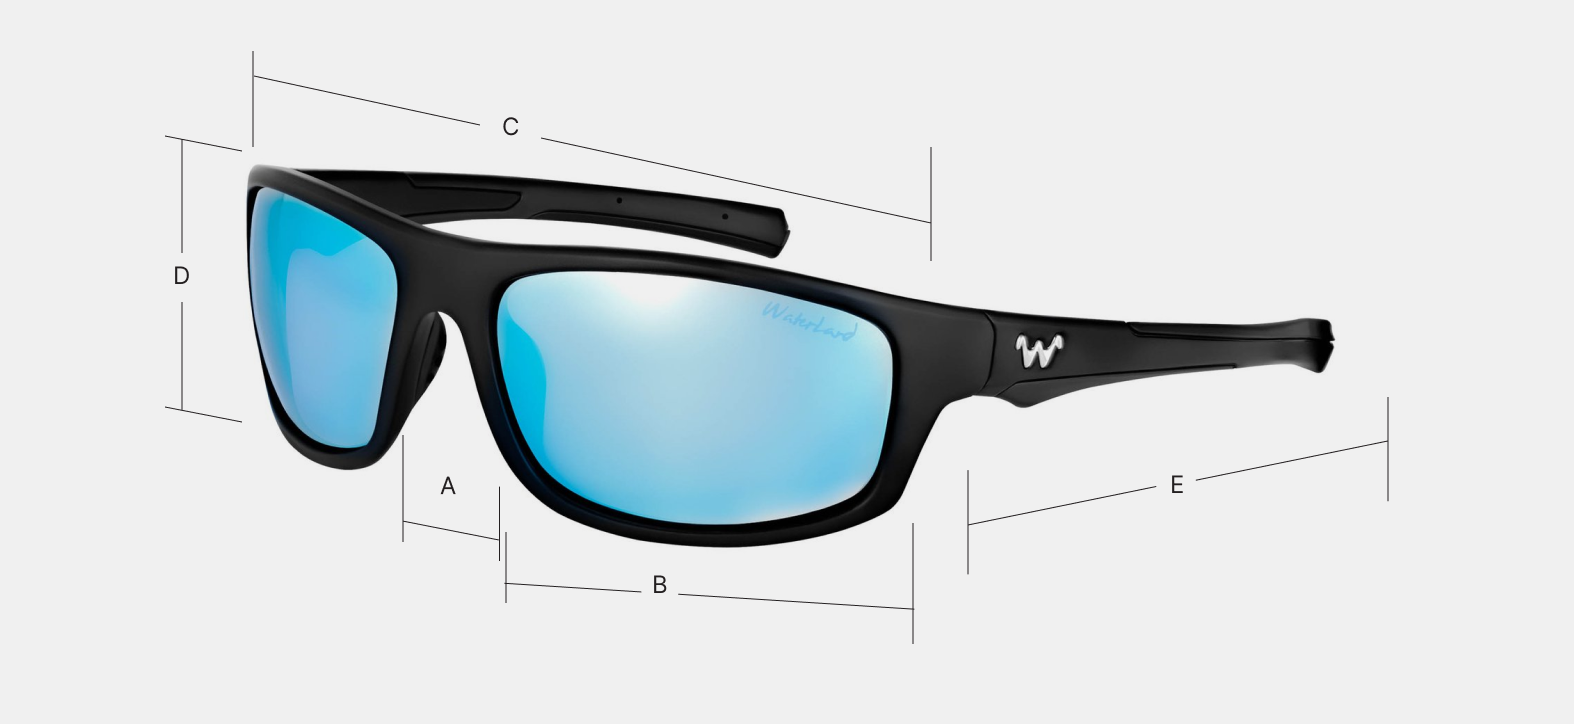 Waterland Hasket Sunglasses Black/Green Mirror